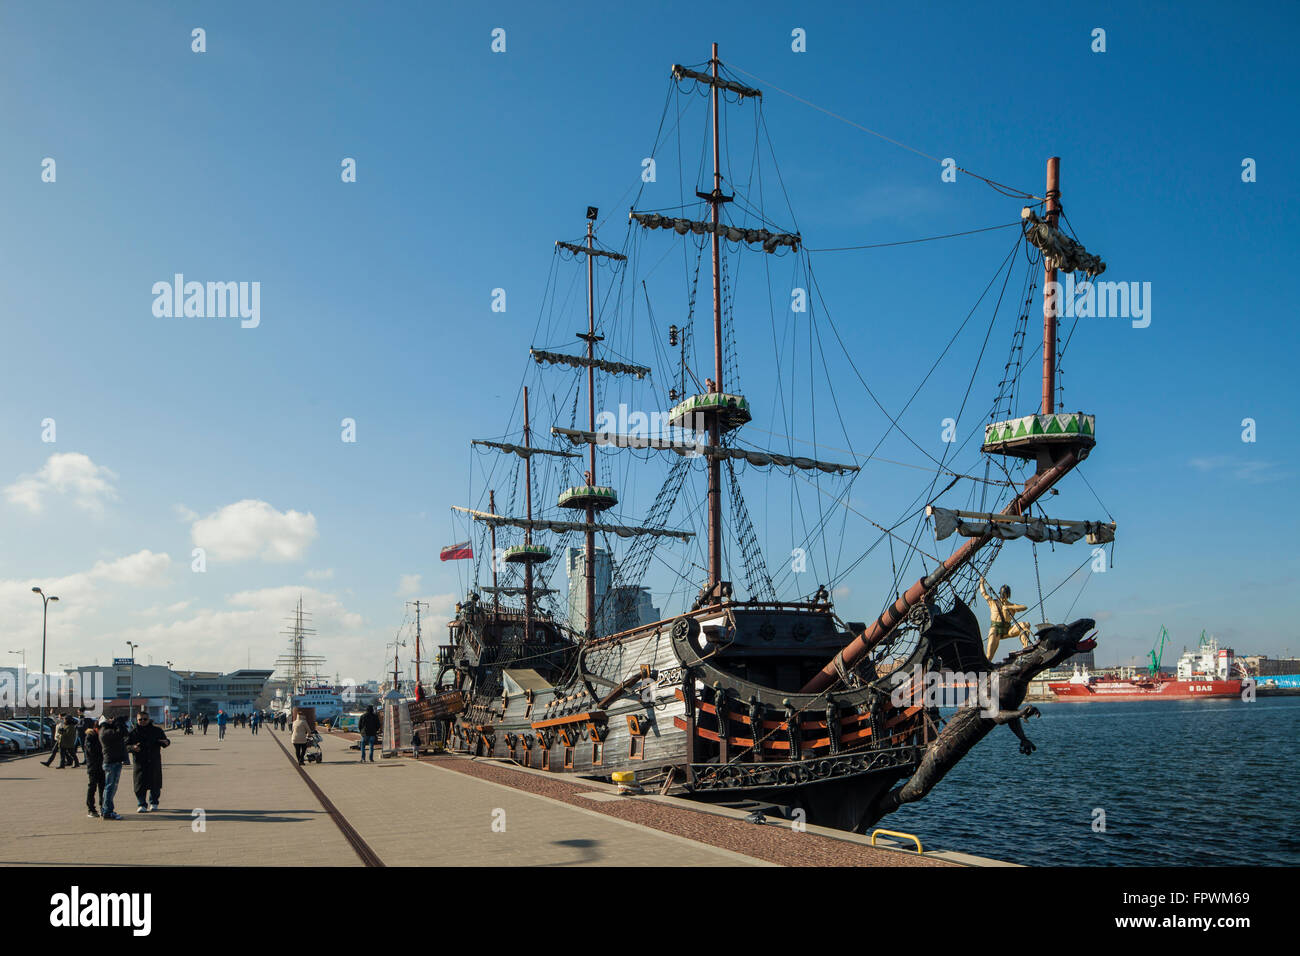 Sail ship 'Dragon' in Gdynia, Poland. Stock Photo